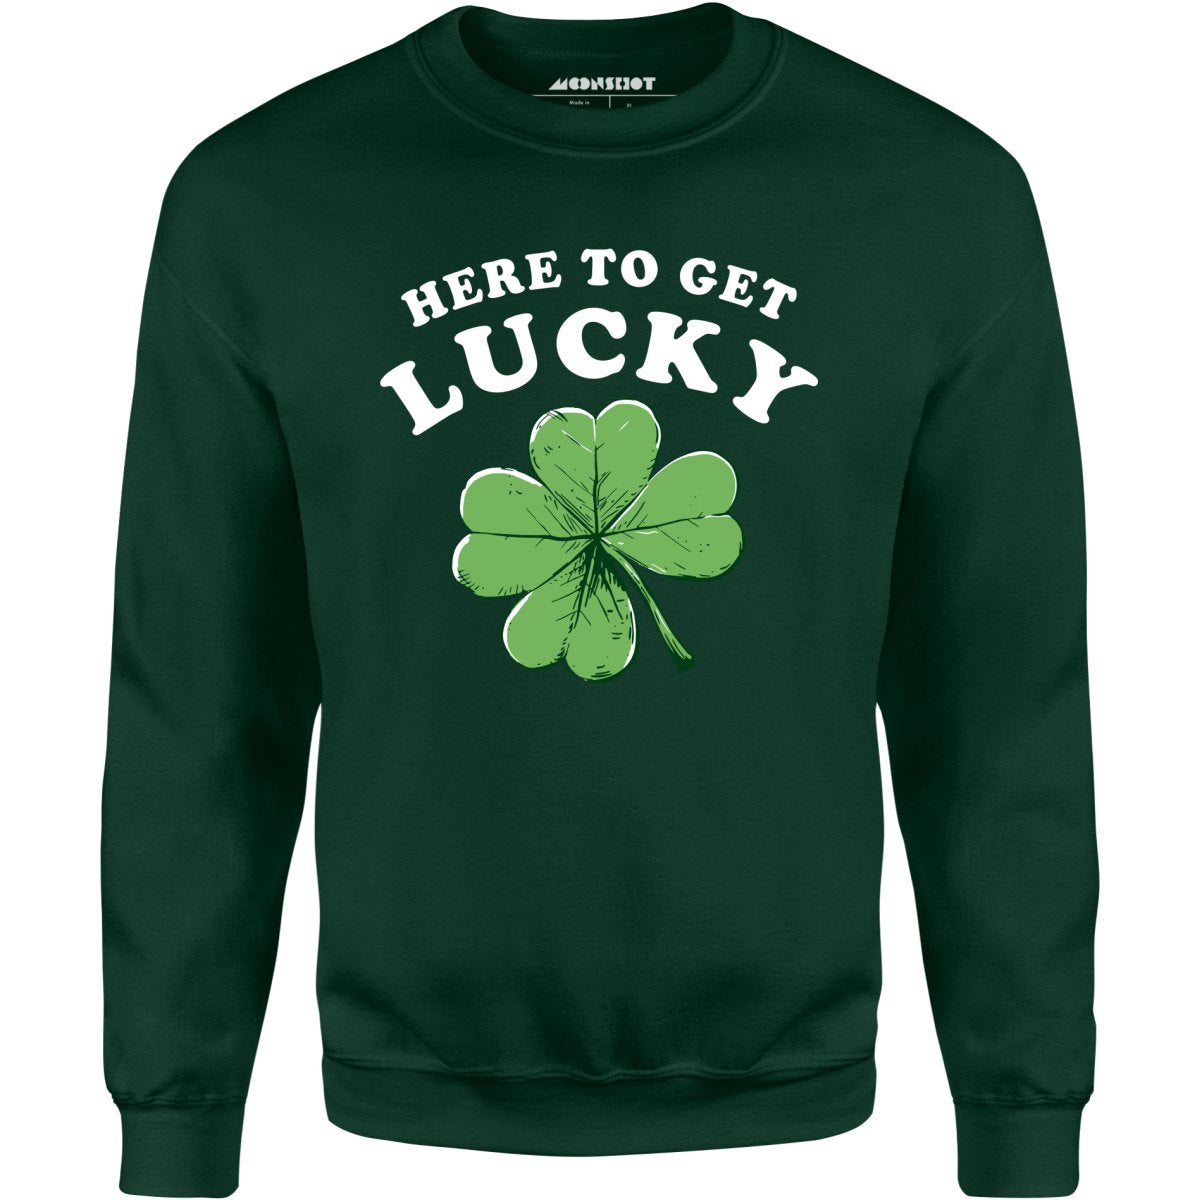 Here To Get Lucky - Unisex Sweatshirt